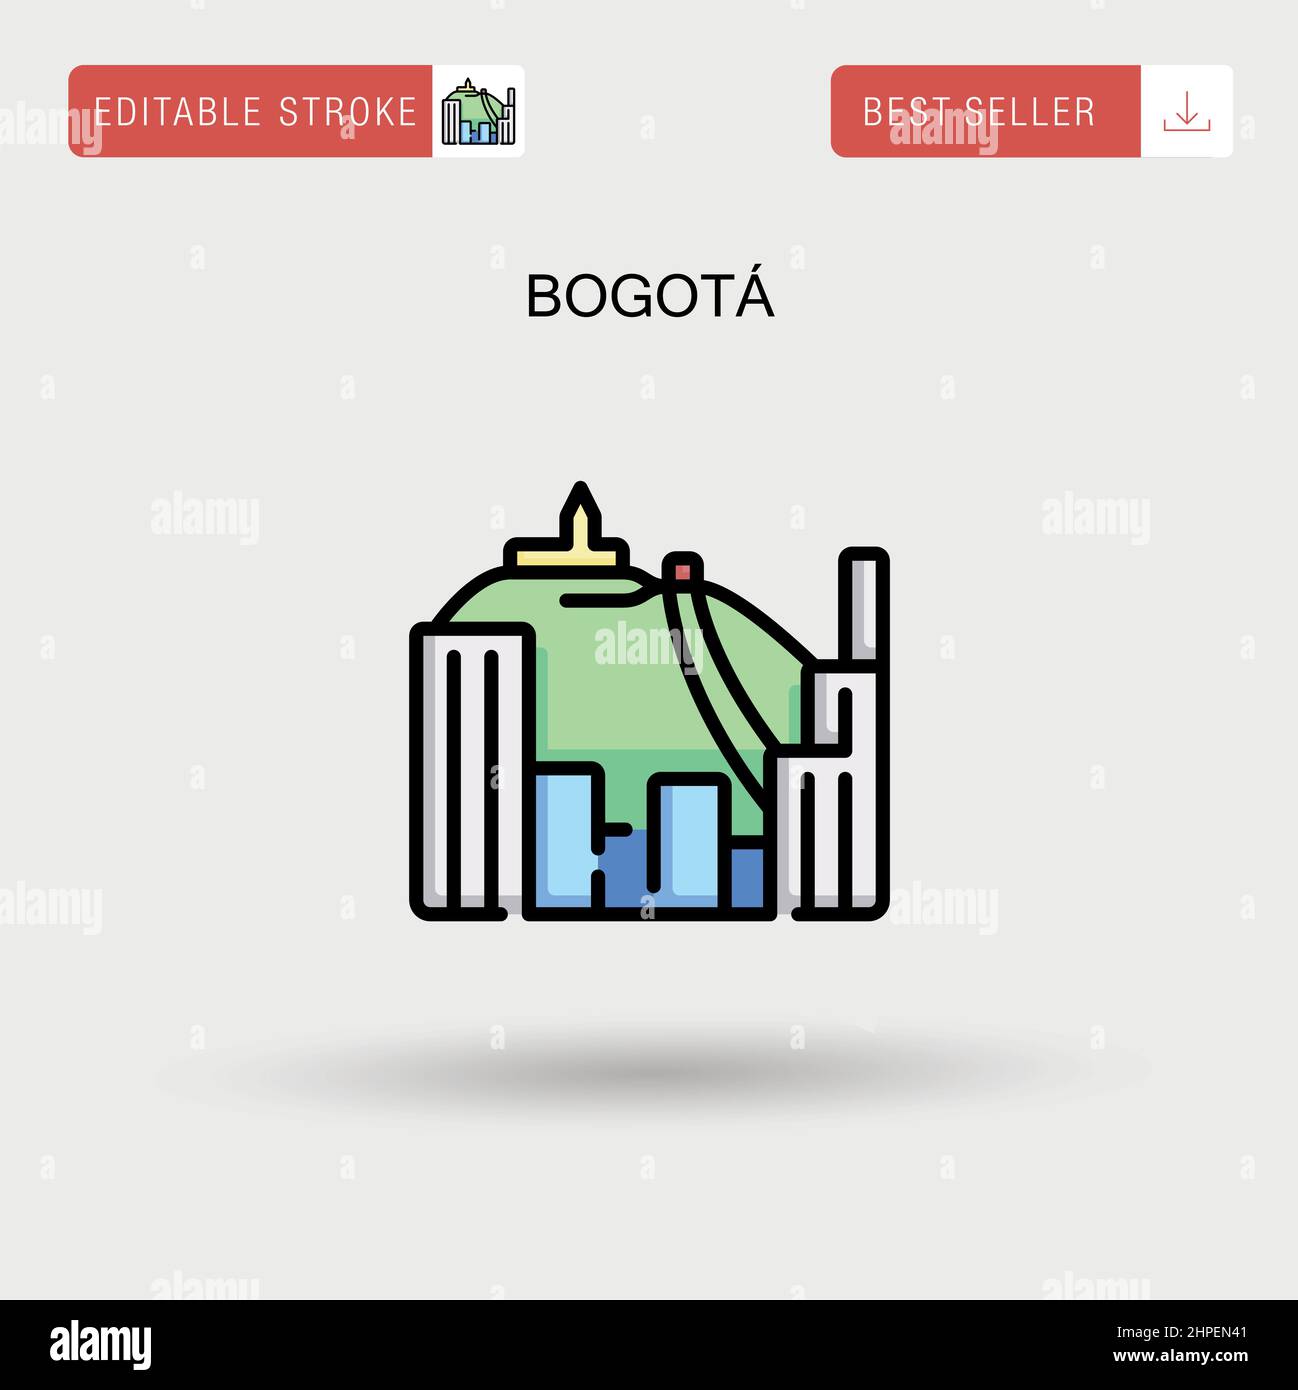 Bogotá Simple vector icon. Stock Vector